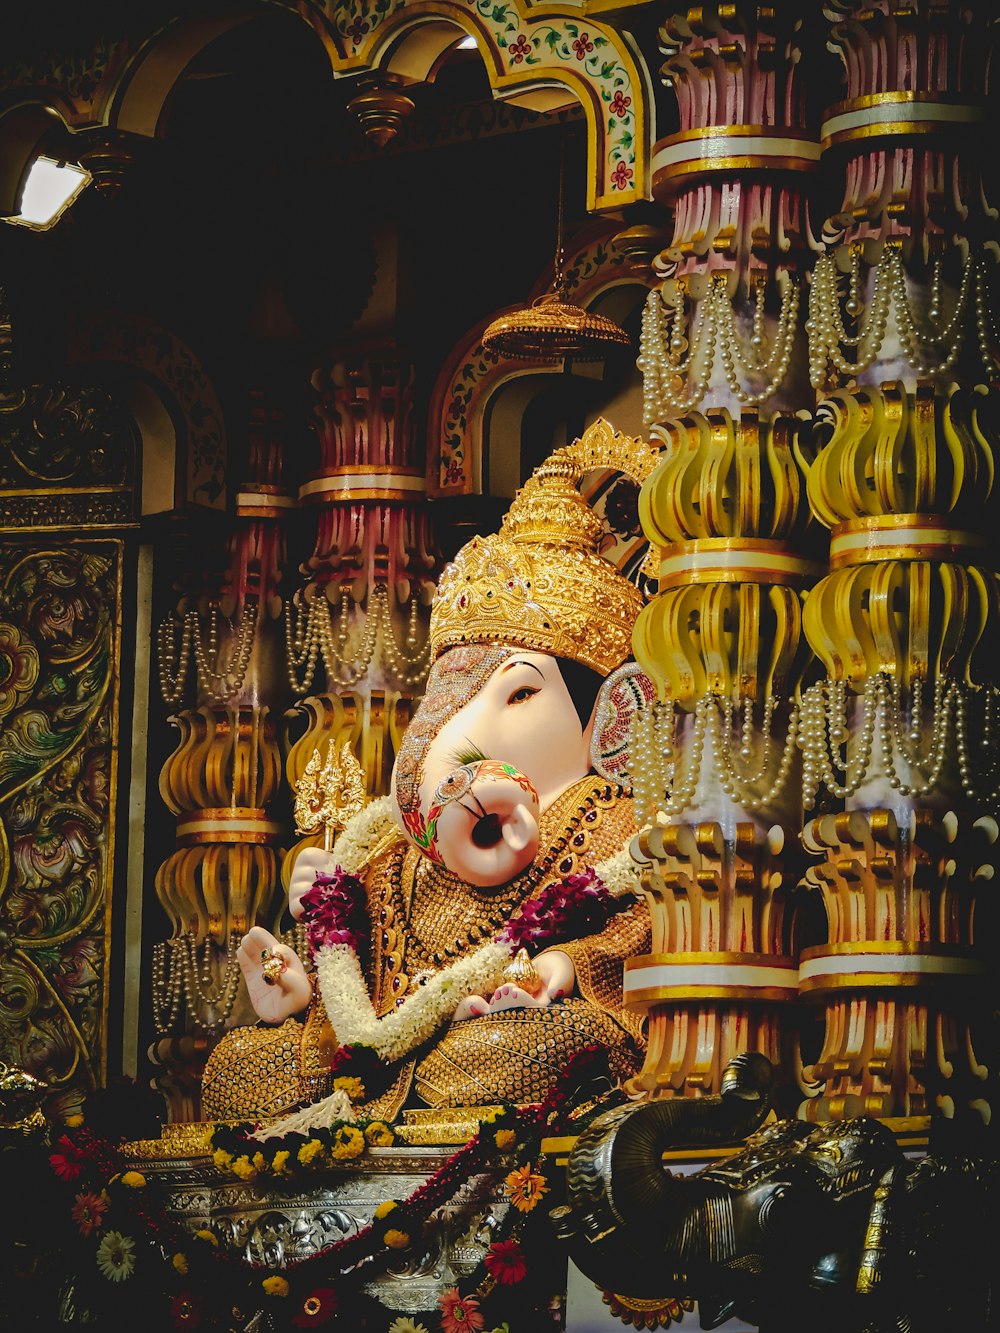 Lord Ganesha figurine